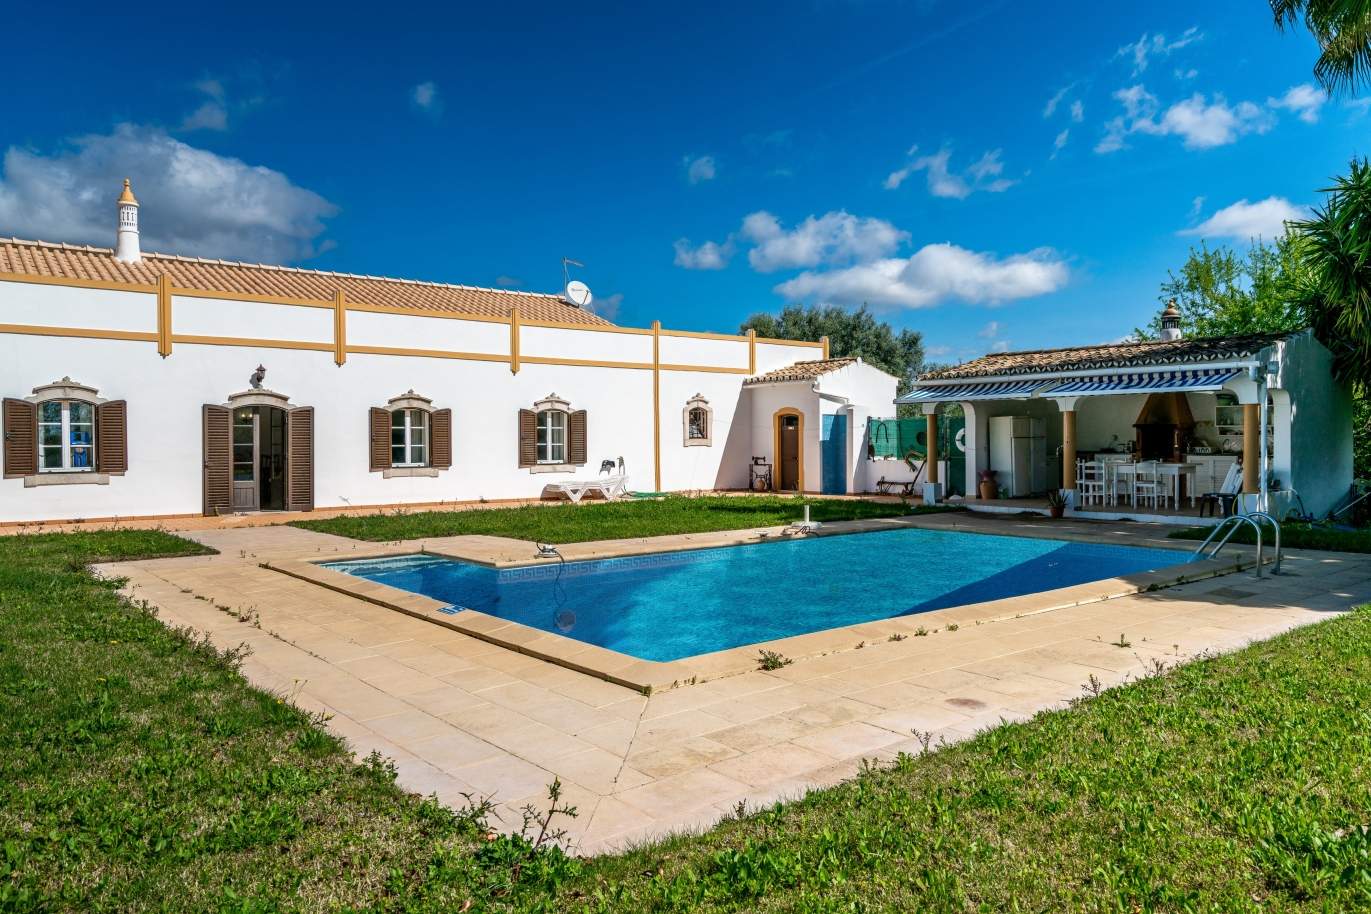 Sale of villa with pool in Boliqueime, Loulé, Algarve, Portugal_110287